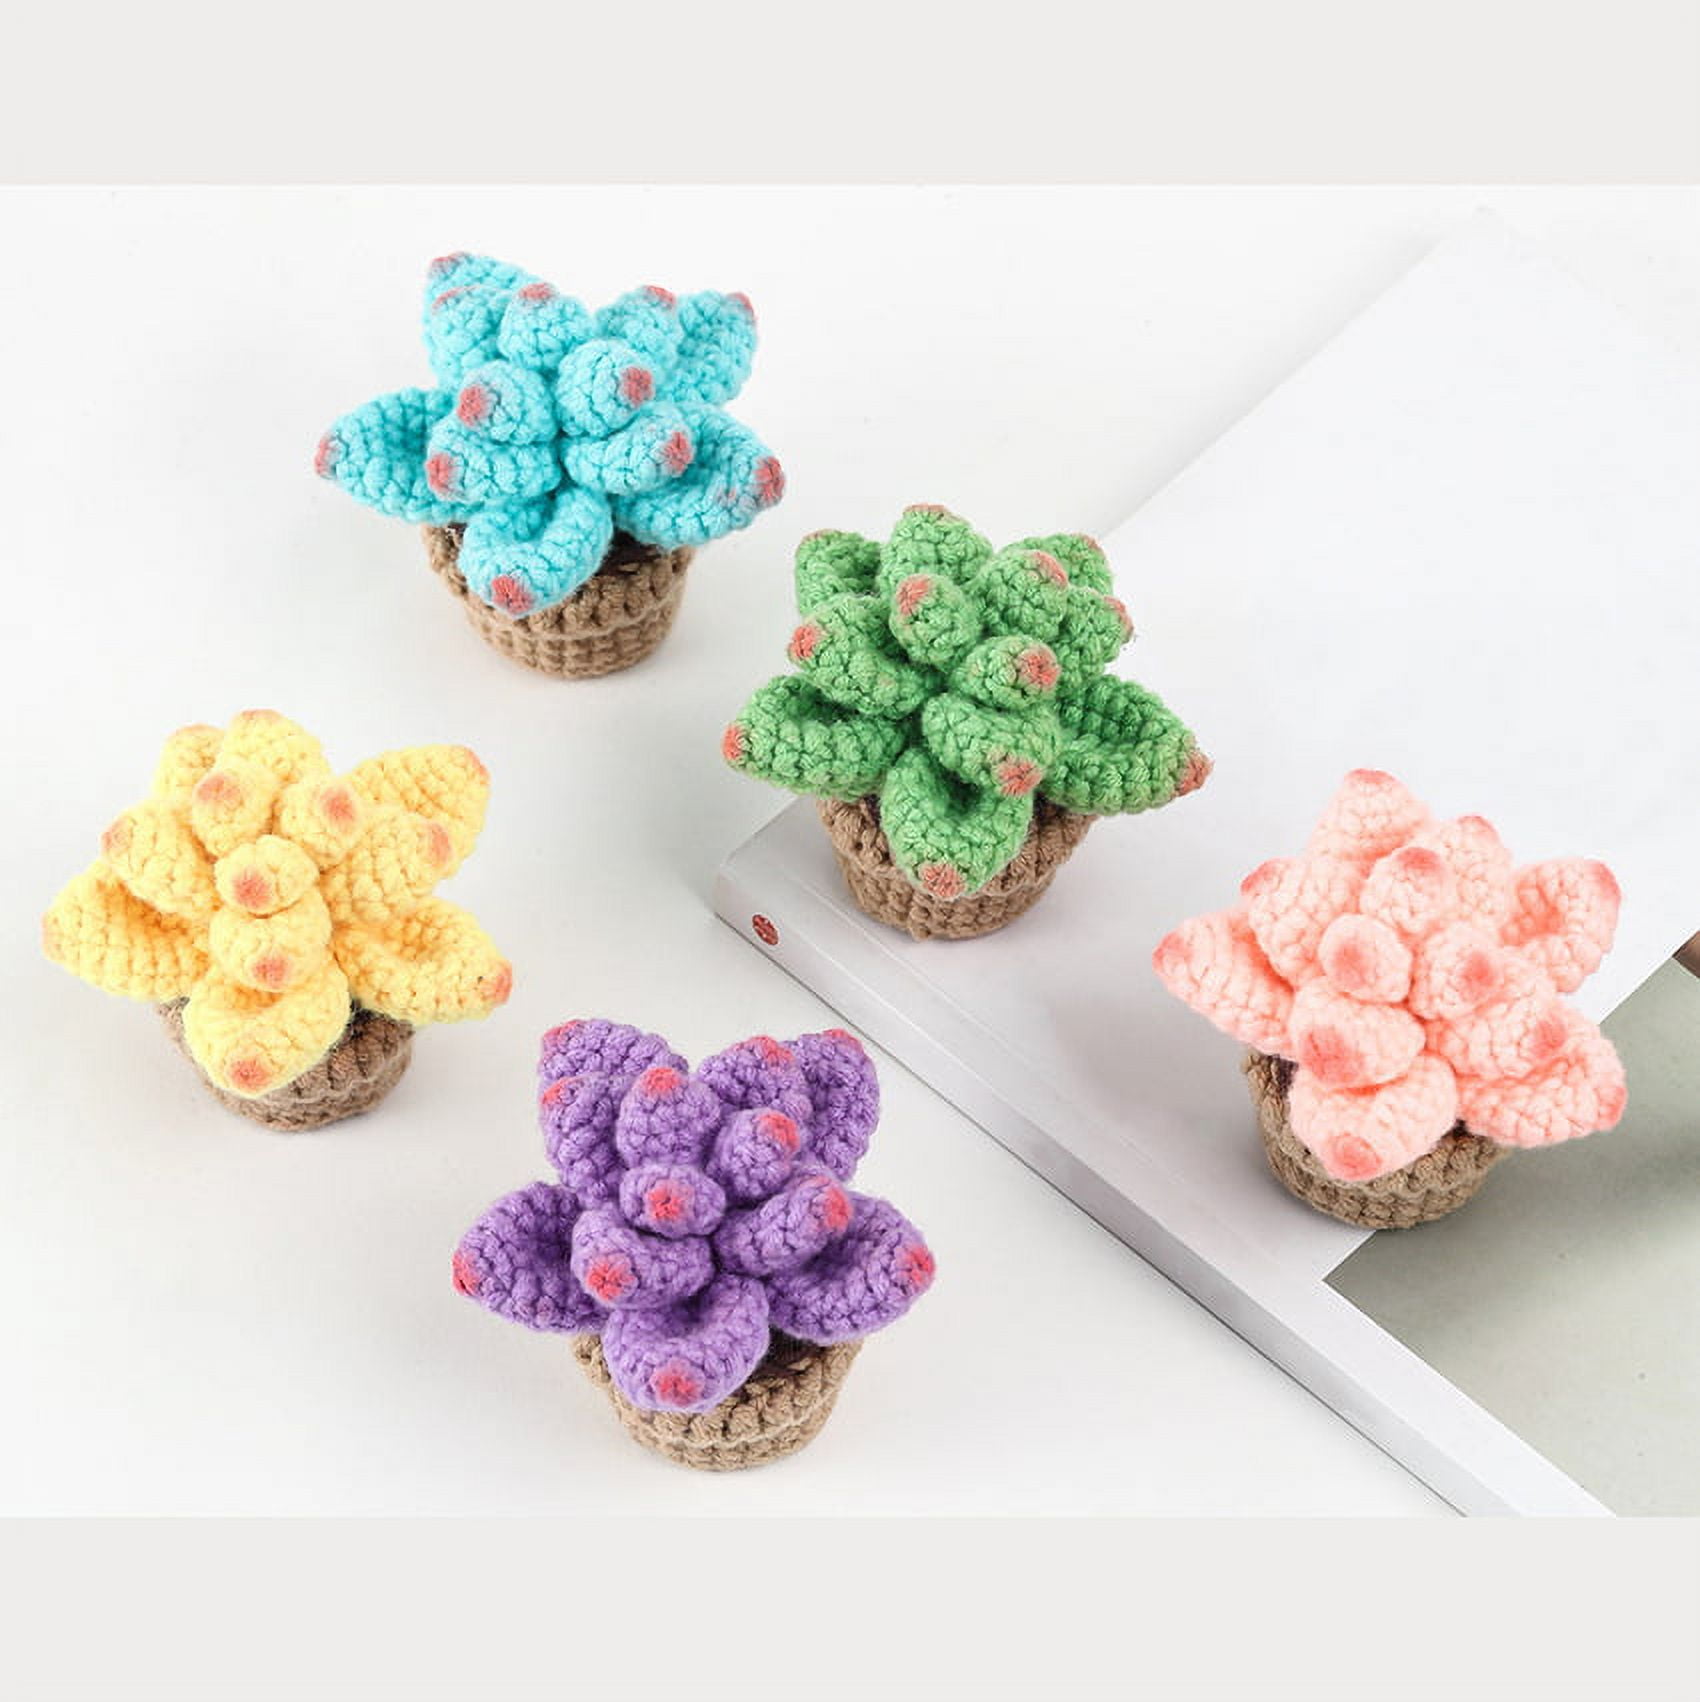 Karsspor Crochet Kit for Beginners Adults - 6 PCS Succulents, Beginner  Crochet Kit with Step-by-Step Instructions and Video Tutorials, Complete  Crochet Kit for …